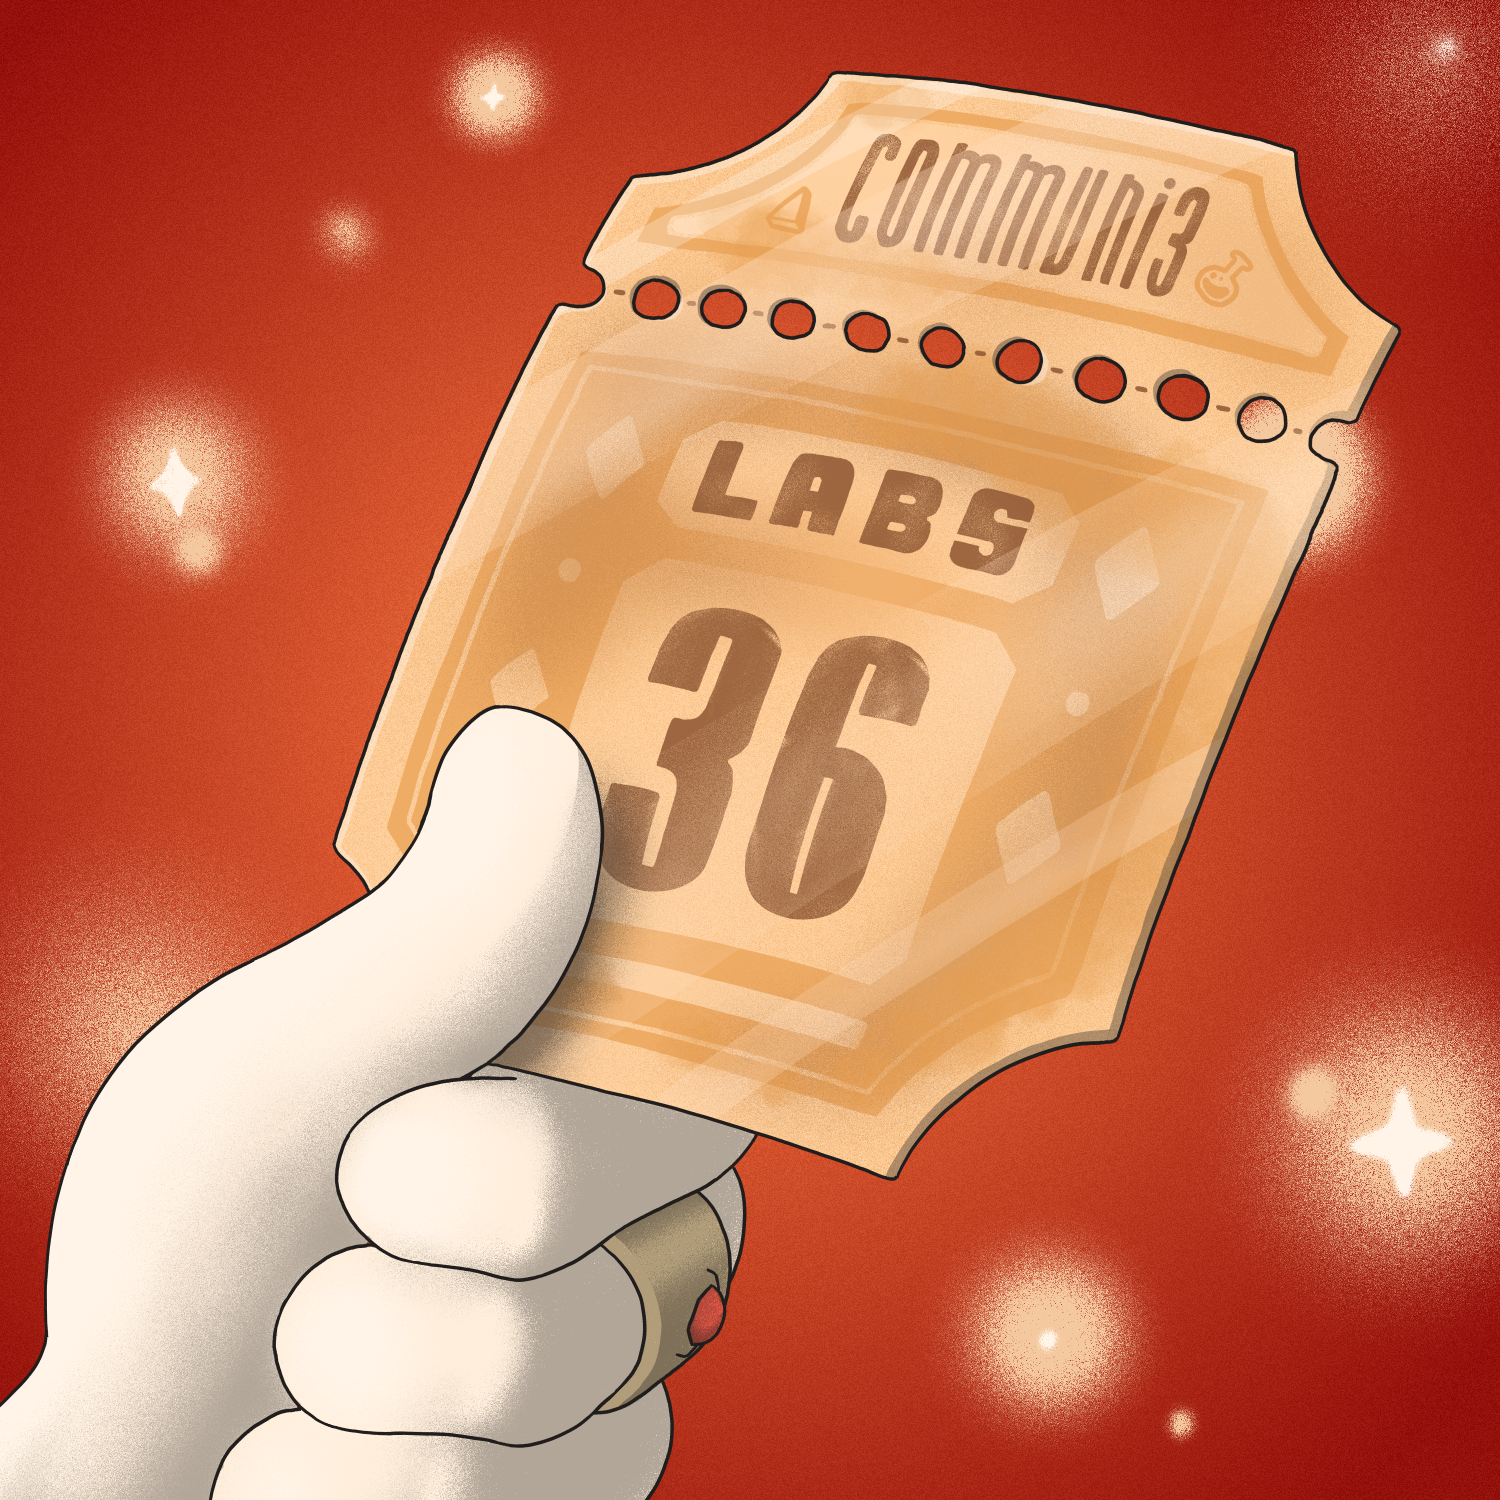 Laboratory #36